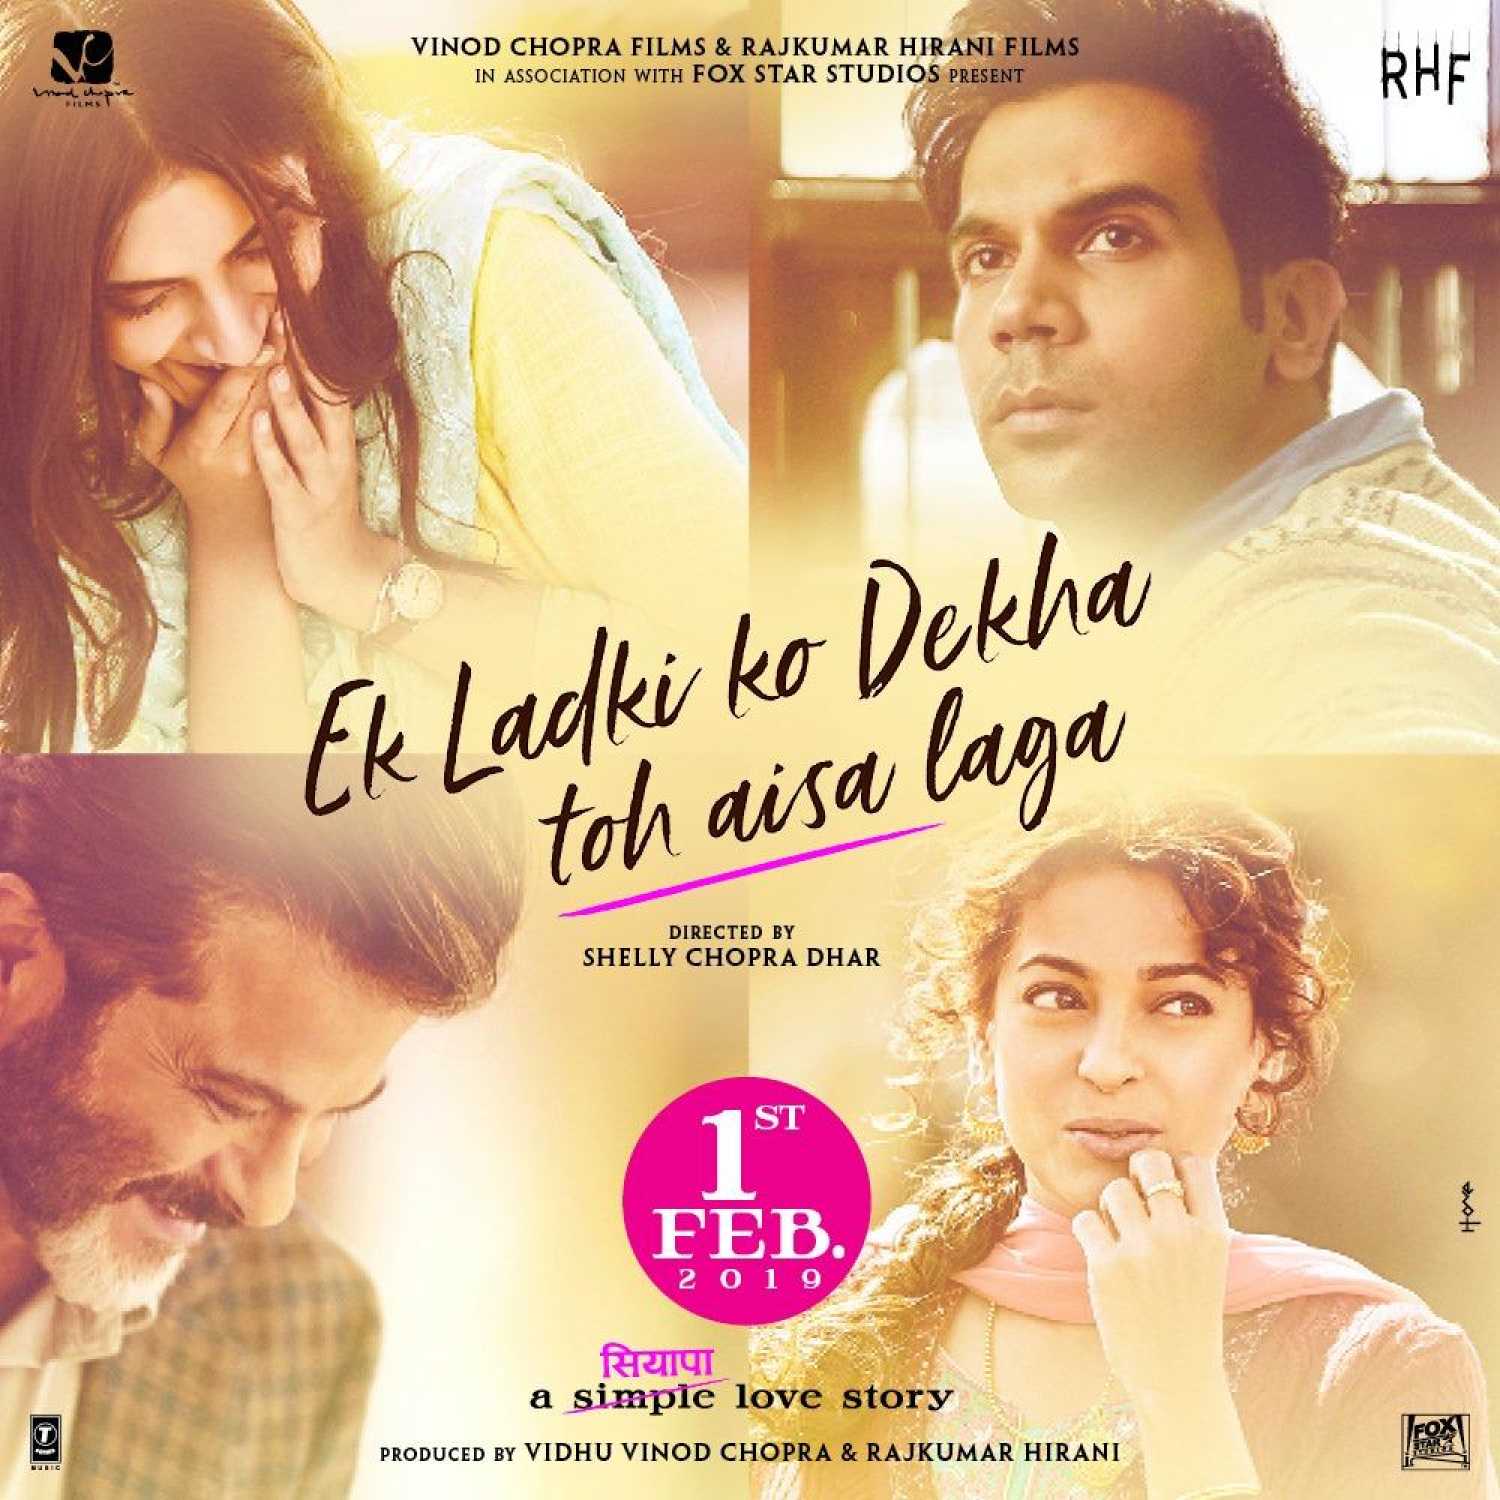 Second Trailer Of Ek Ladki Ko Dekha Toh Aisa Laga Unveils The Secret Of Unusual Love Story